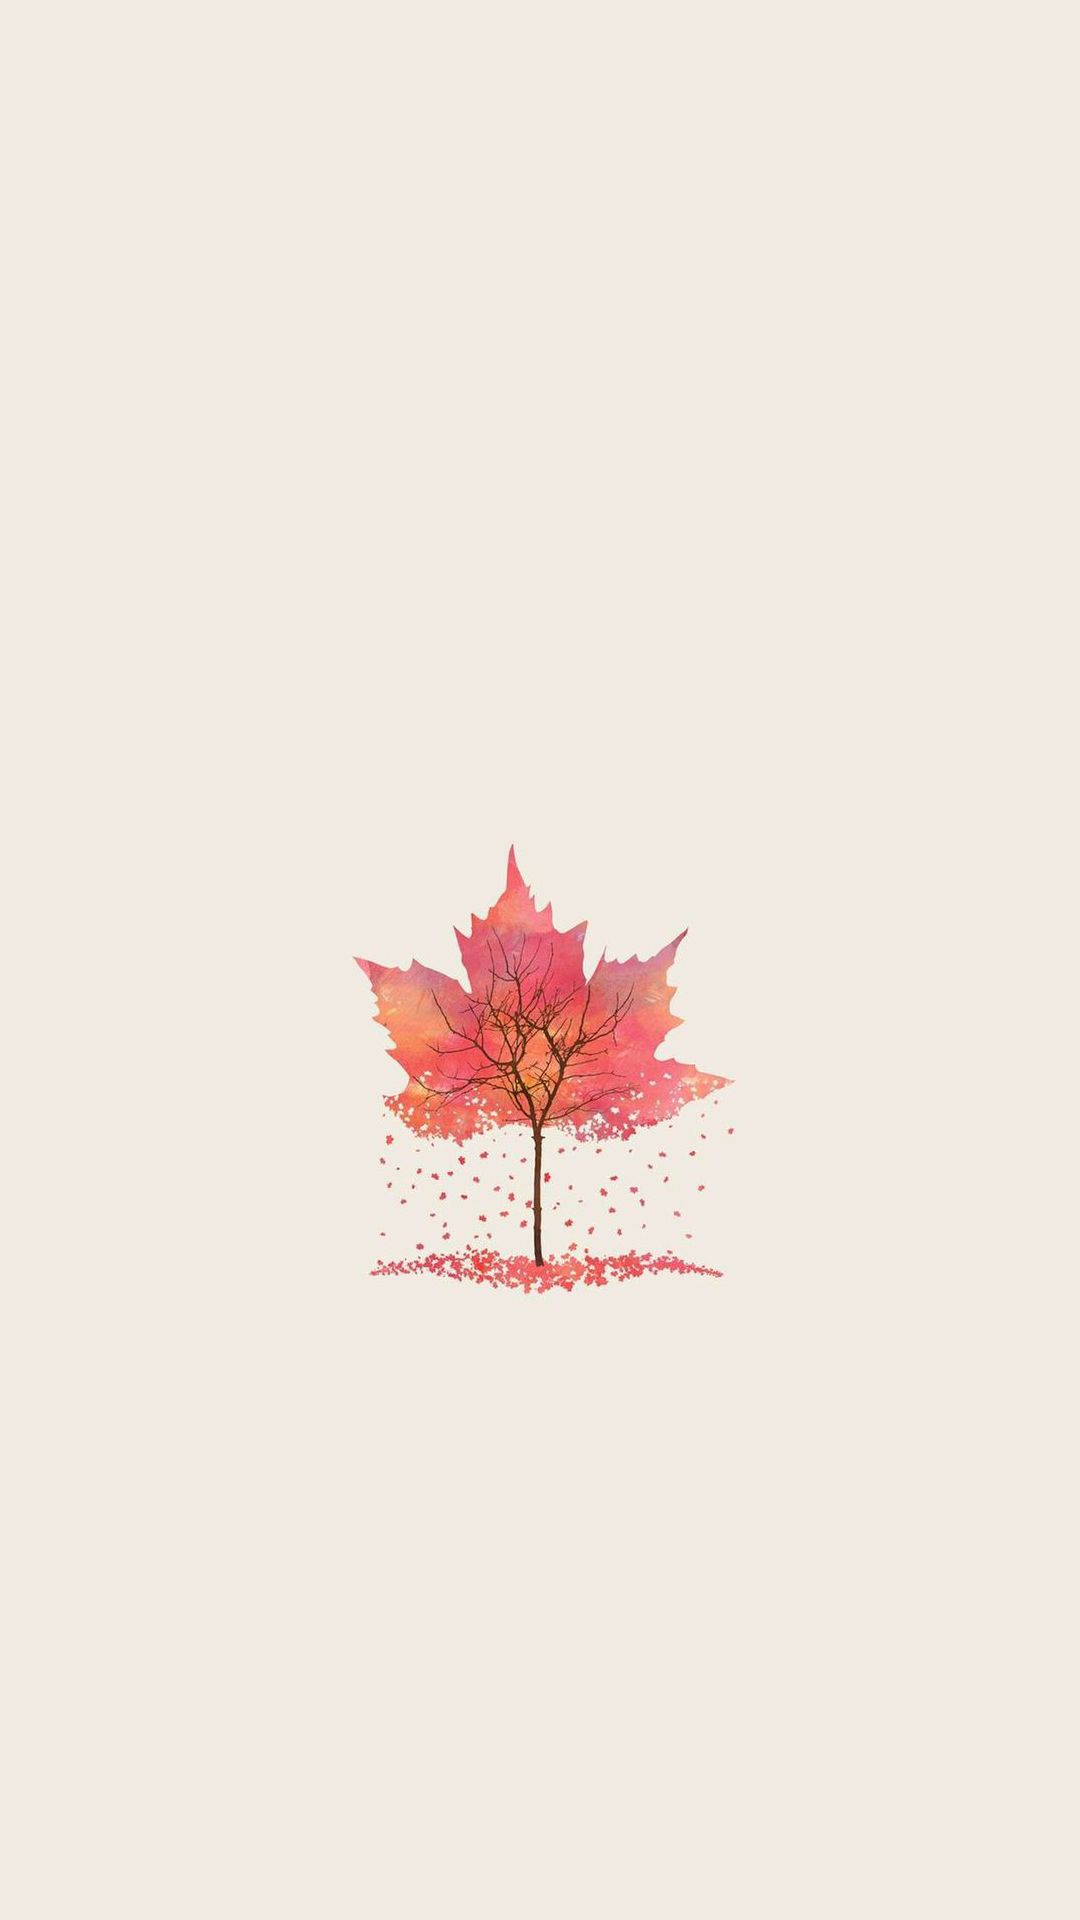 Minimal Autumn Tree Leaf Illustration Android Wallpaper free download